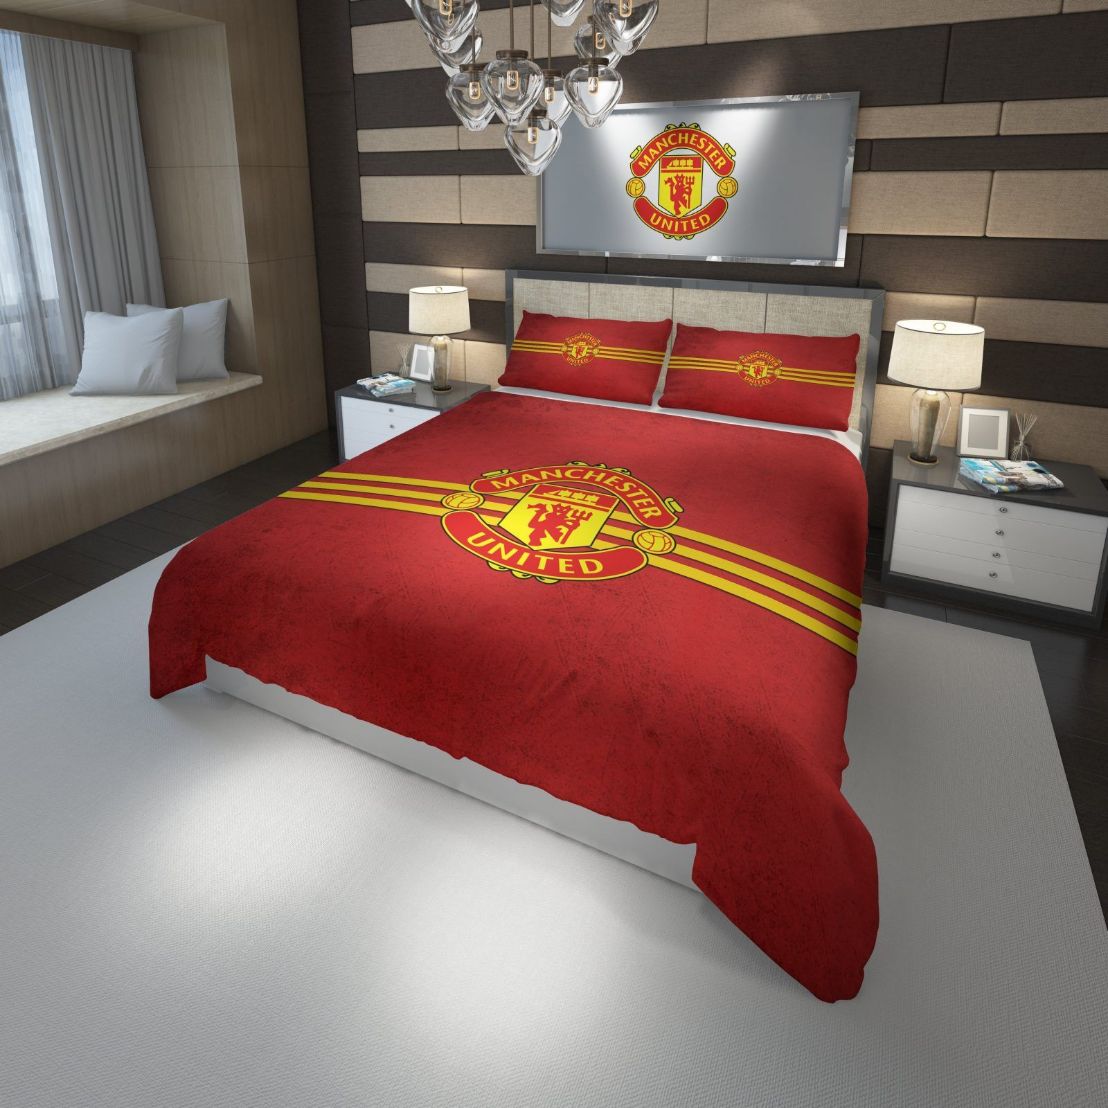 3d Manchester United Soccer Club Logo Bedding Set